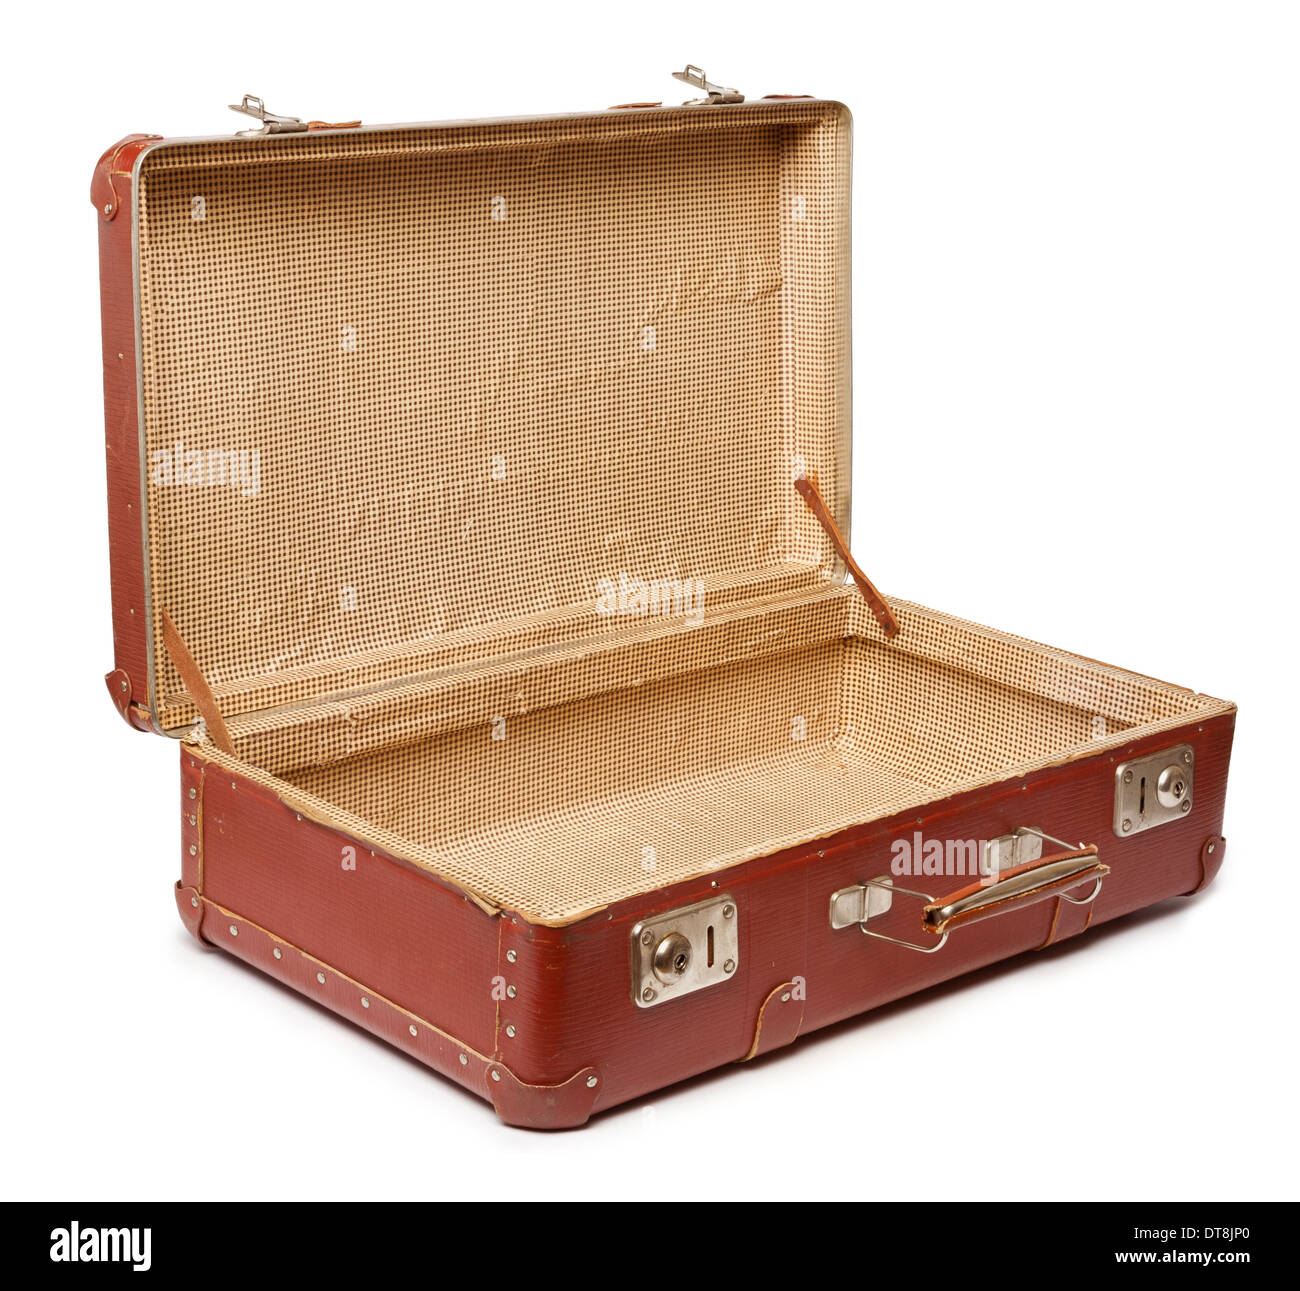 Empty vintage open suitcase on white background Stock Photo